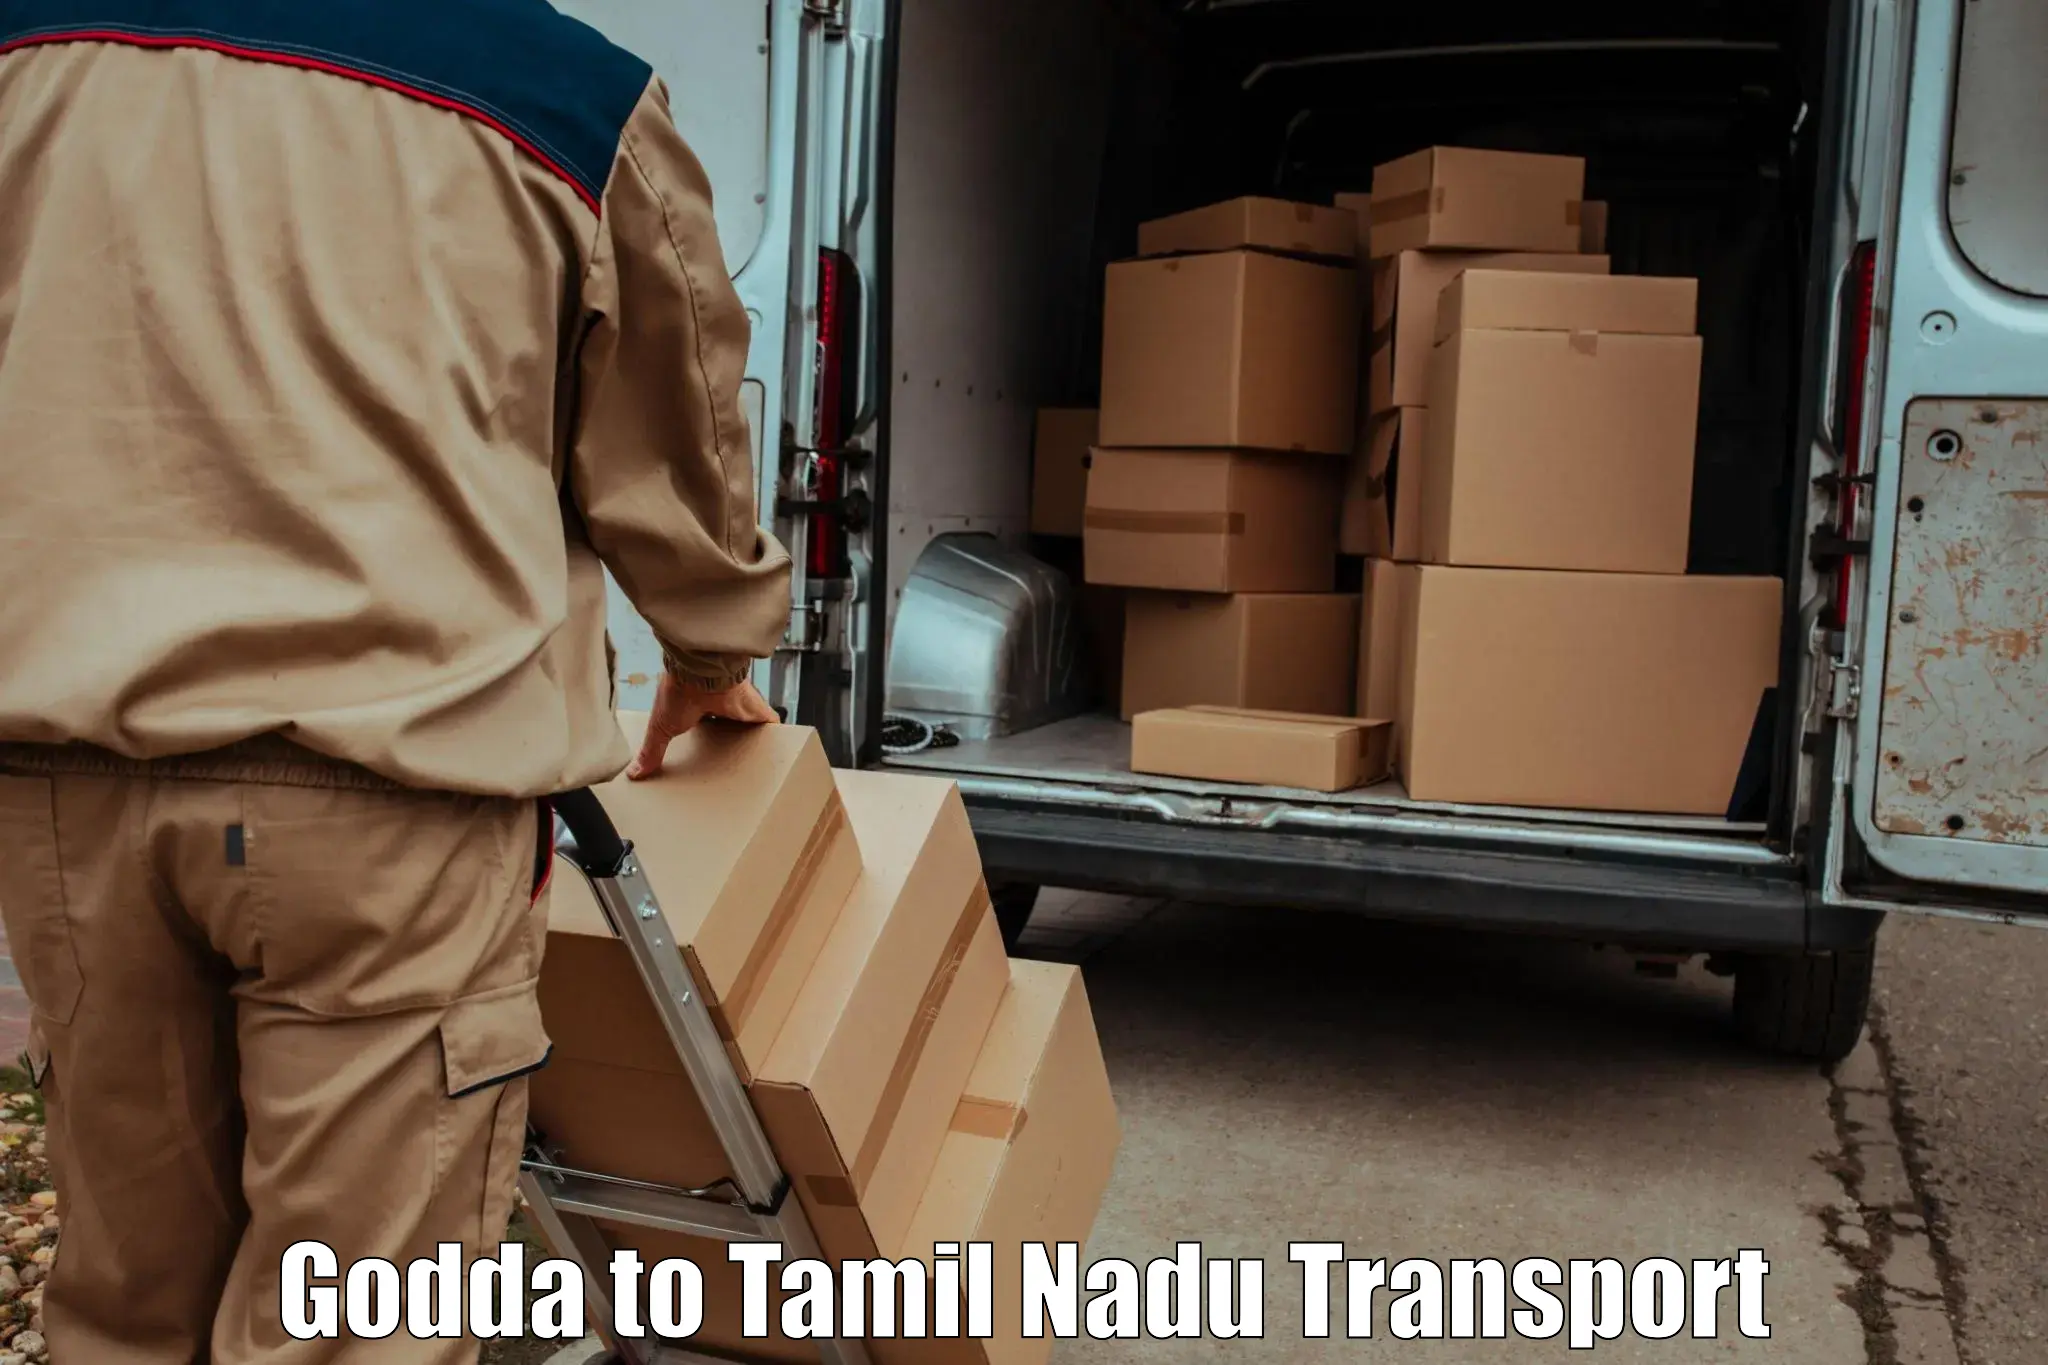 Cycle transportation service Godda to Thiruporur